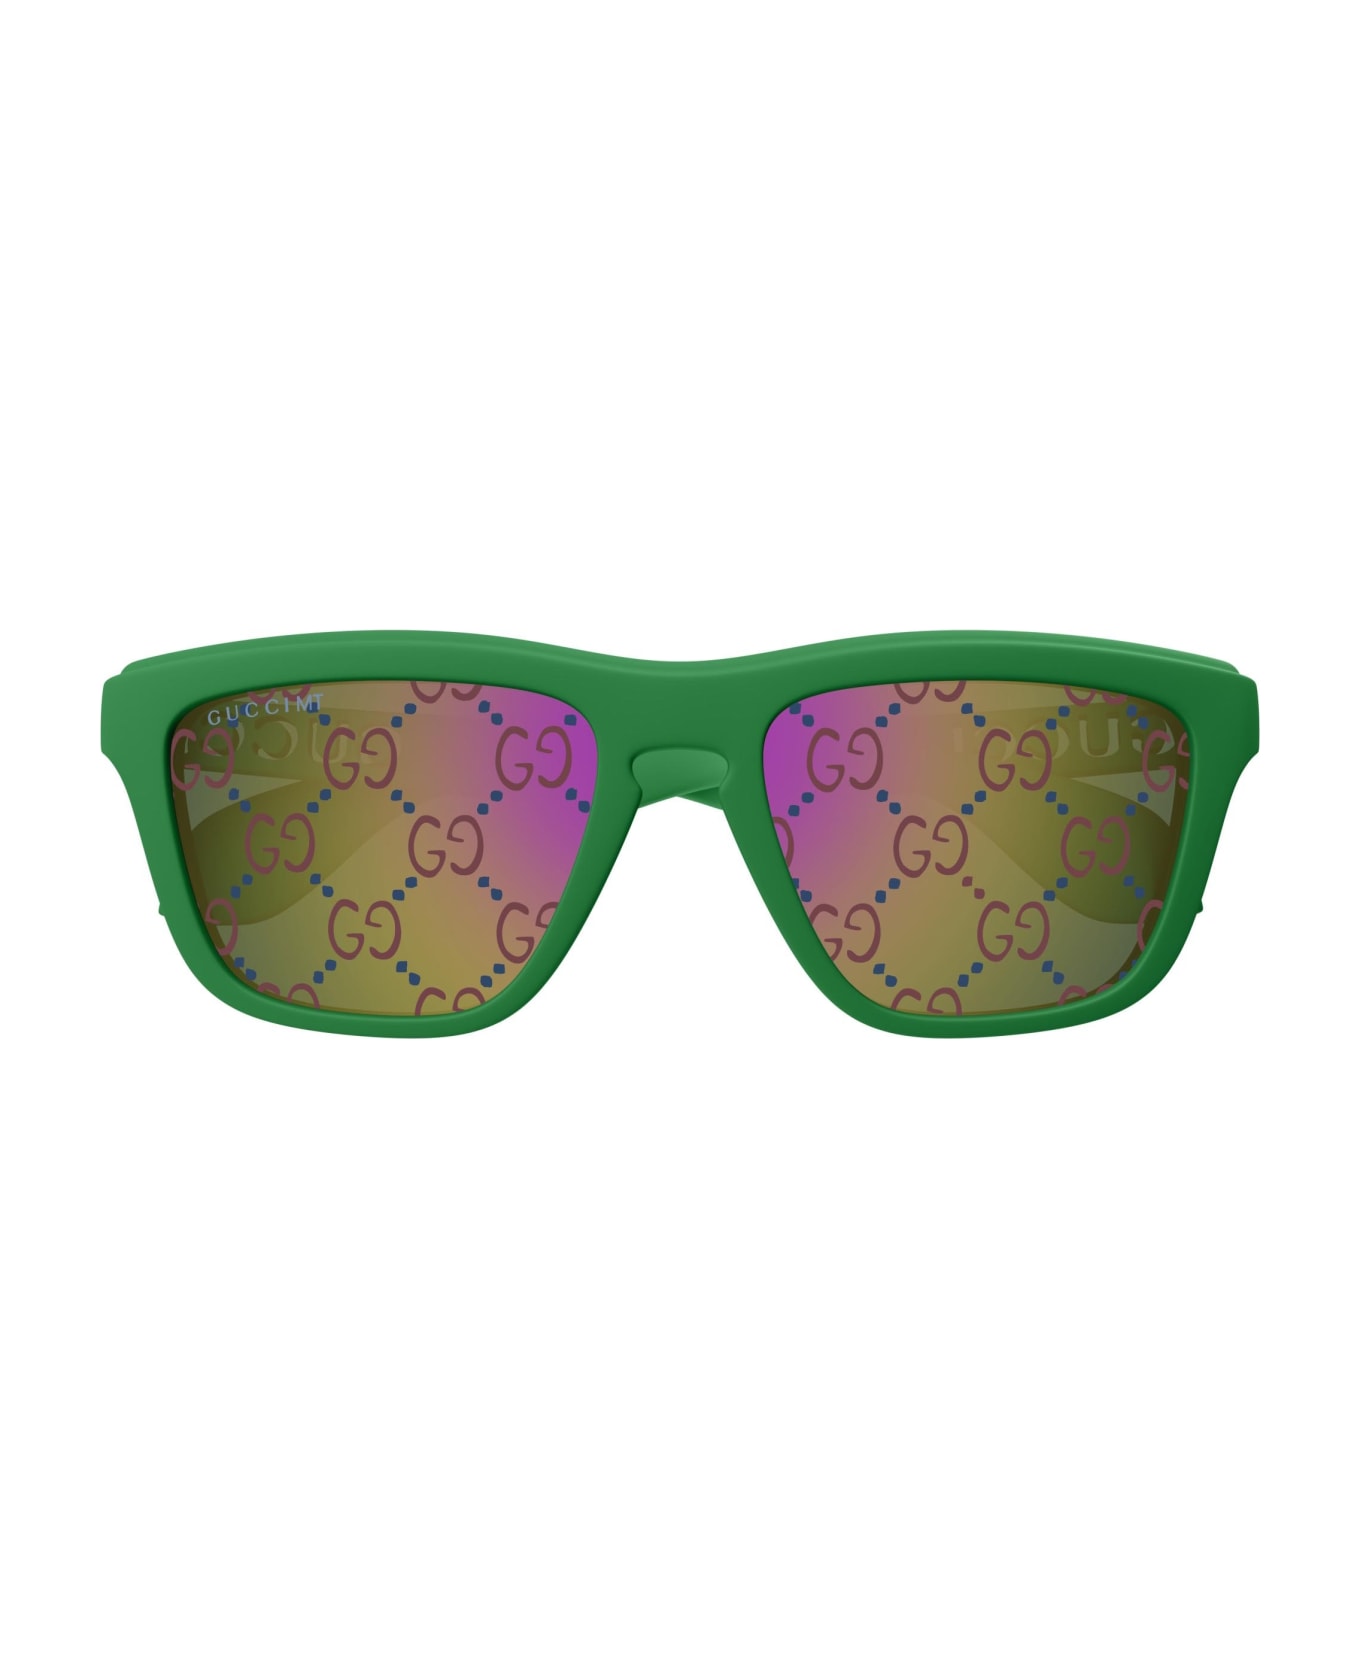 Gucci Eyewear Sunglasses - Verde/Blu